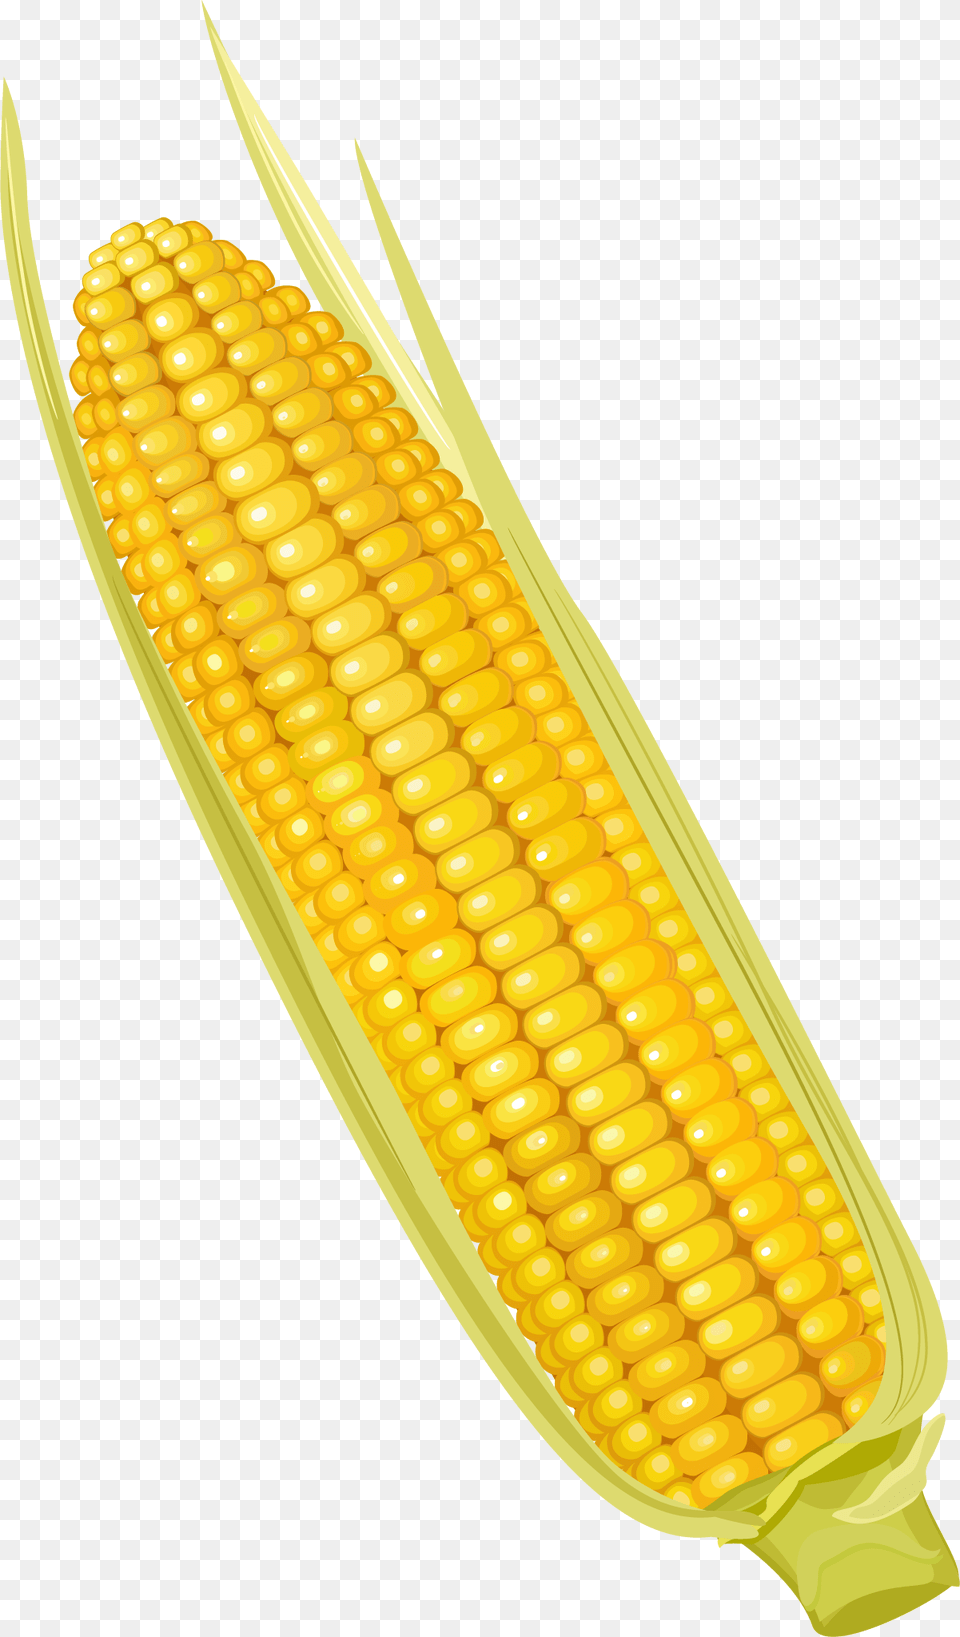 Corn On The Cob Maize Corncob Vegetable Yellow Corn Clipart, Food, Grain, Plant, Produce Free Transparent Png